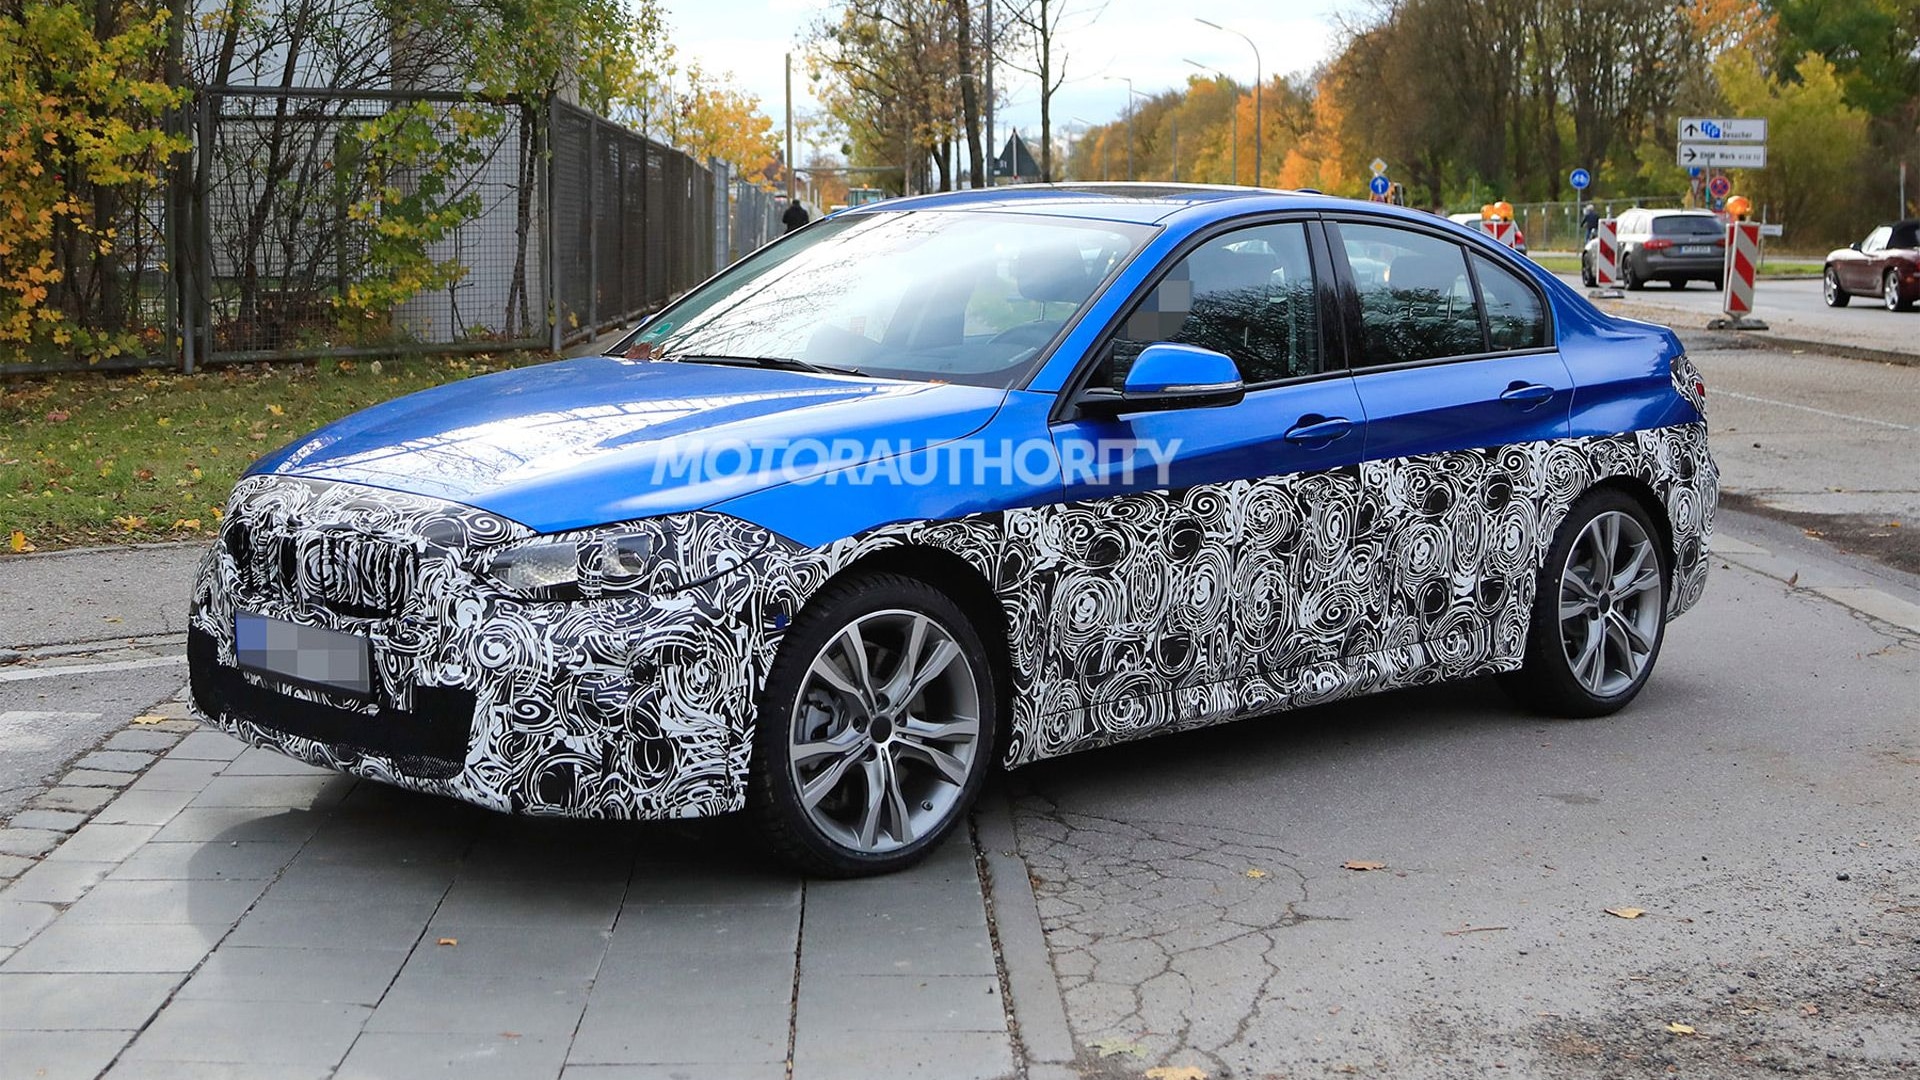 2020 BMW 1-Series facelift spy shots - Image via S. Baldauf/SB-Medien